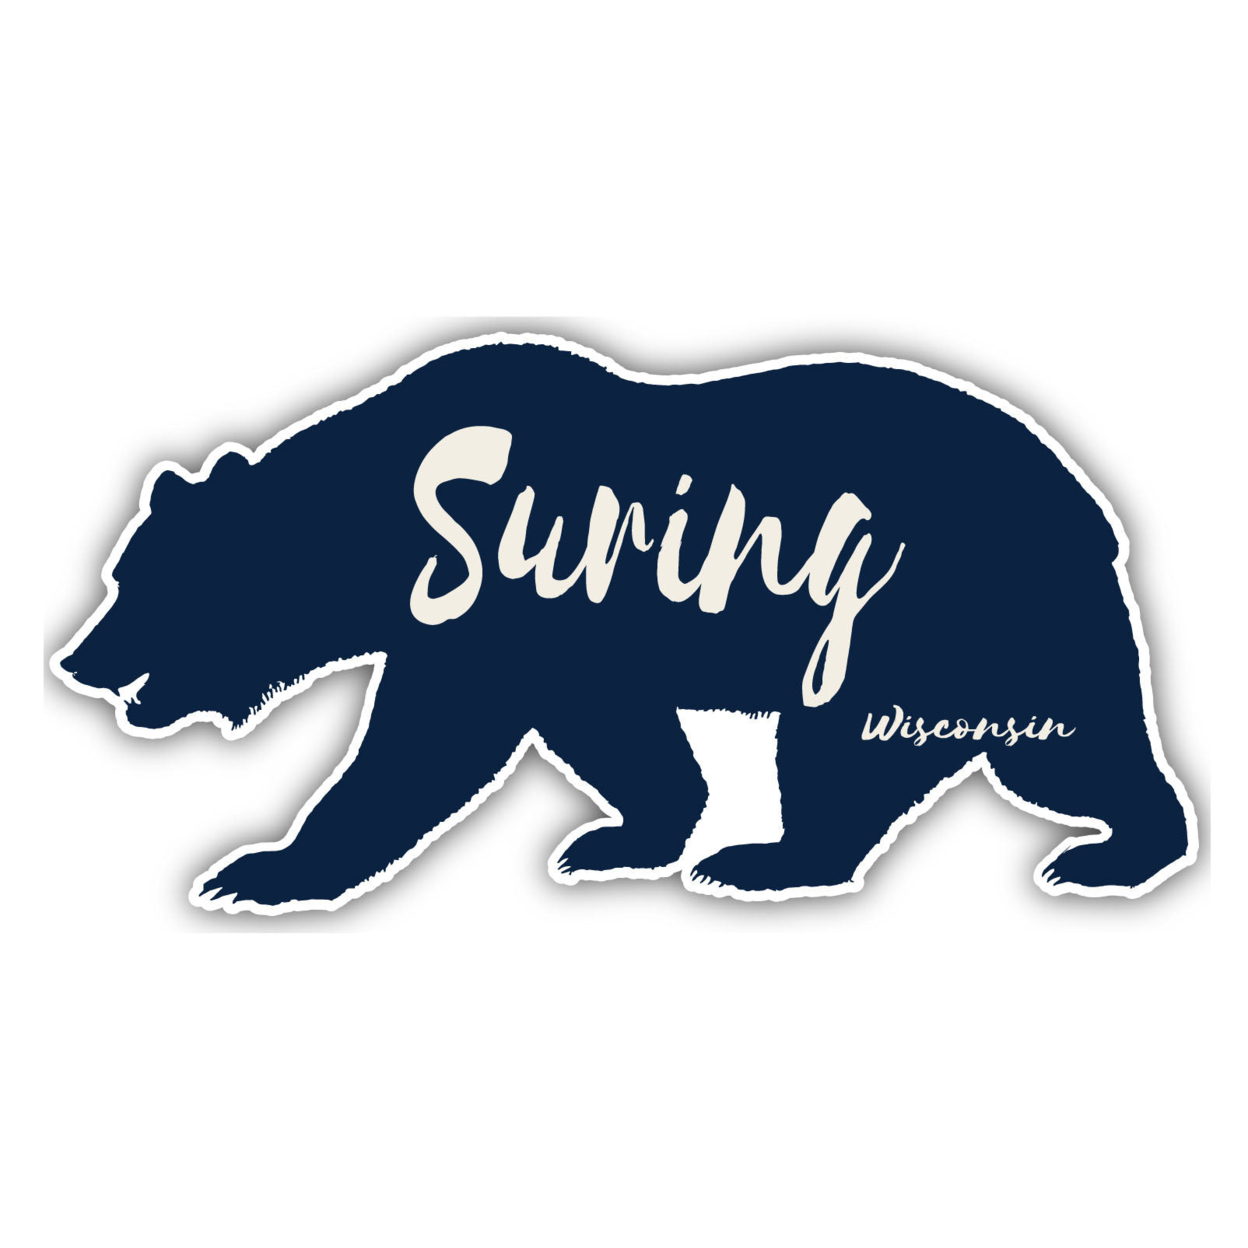 Suring Wisconsin Souvenir Decorative Stickers (Choose Theme And Size) - Single Unit, 2-Inch, Bear